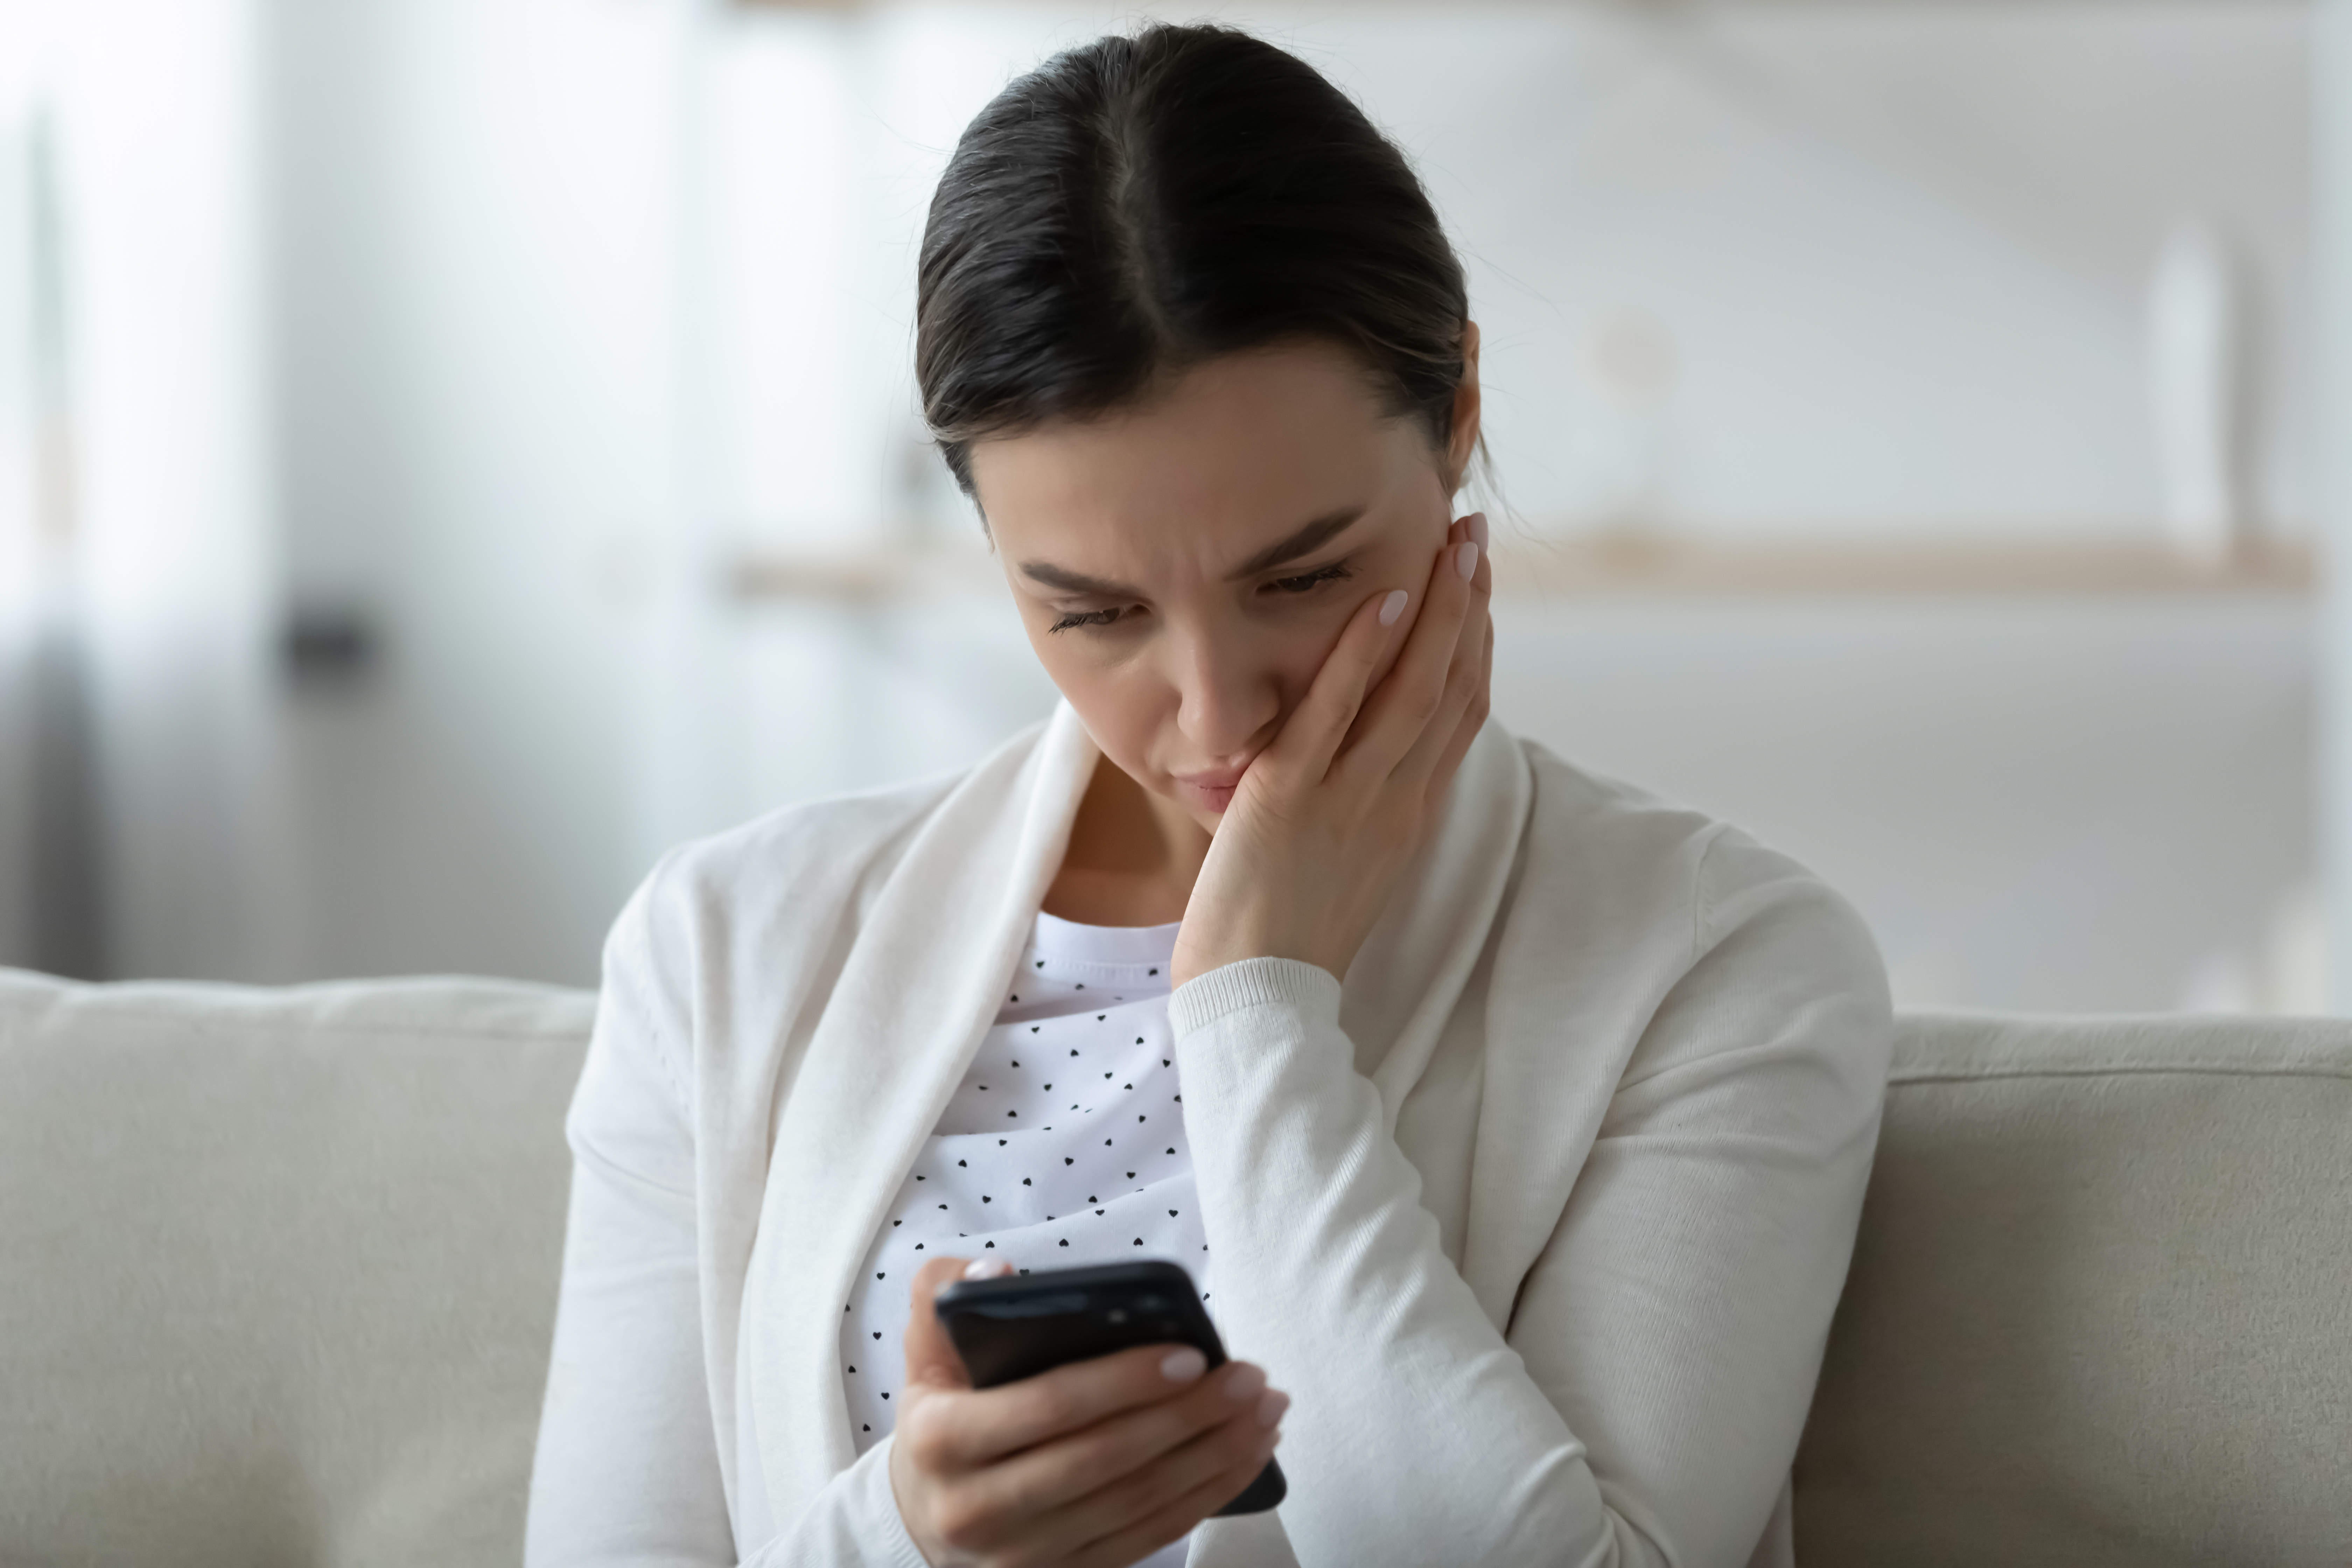 Une jeune femme malheureuse qui regarde son téléphone portable | Source : Shutterstock